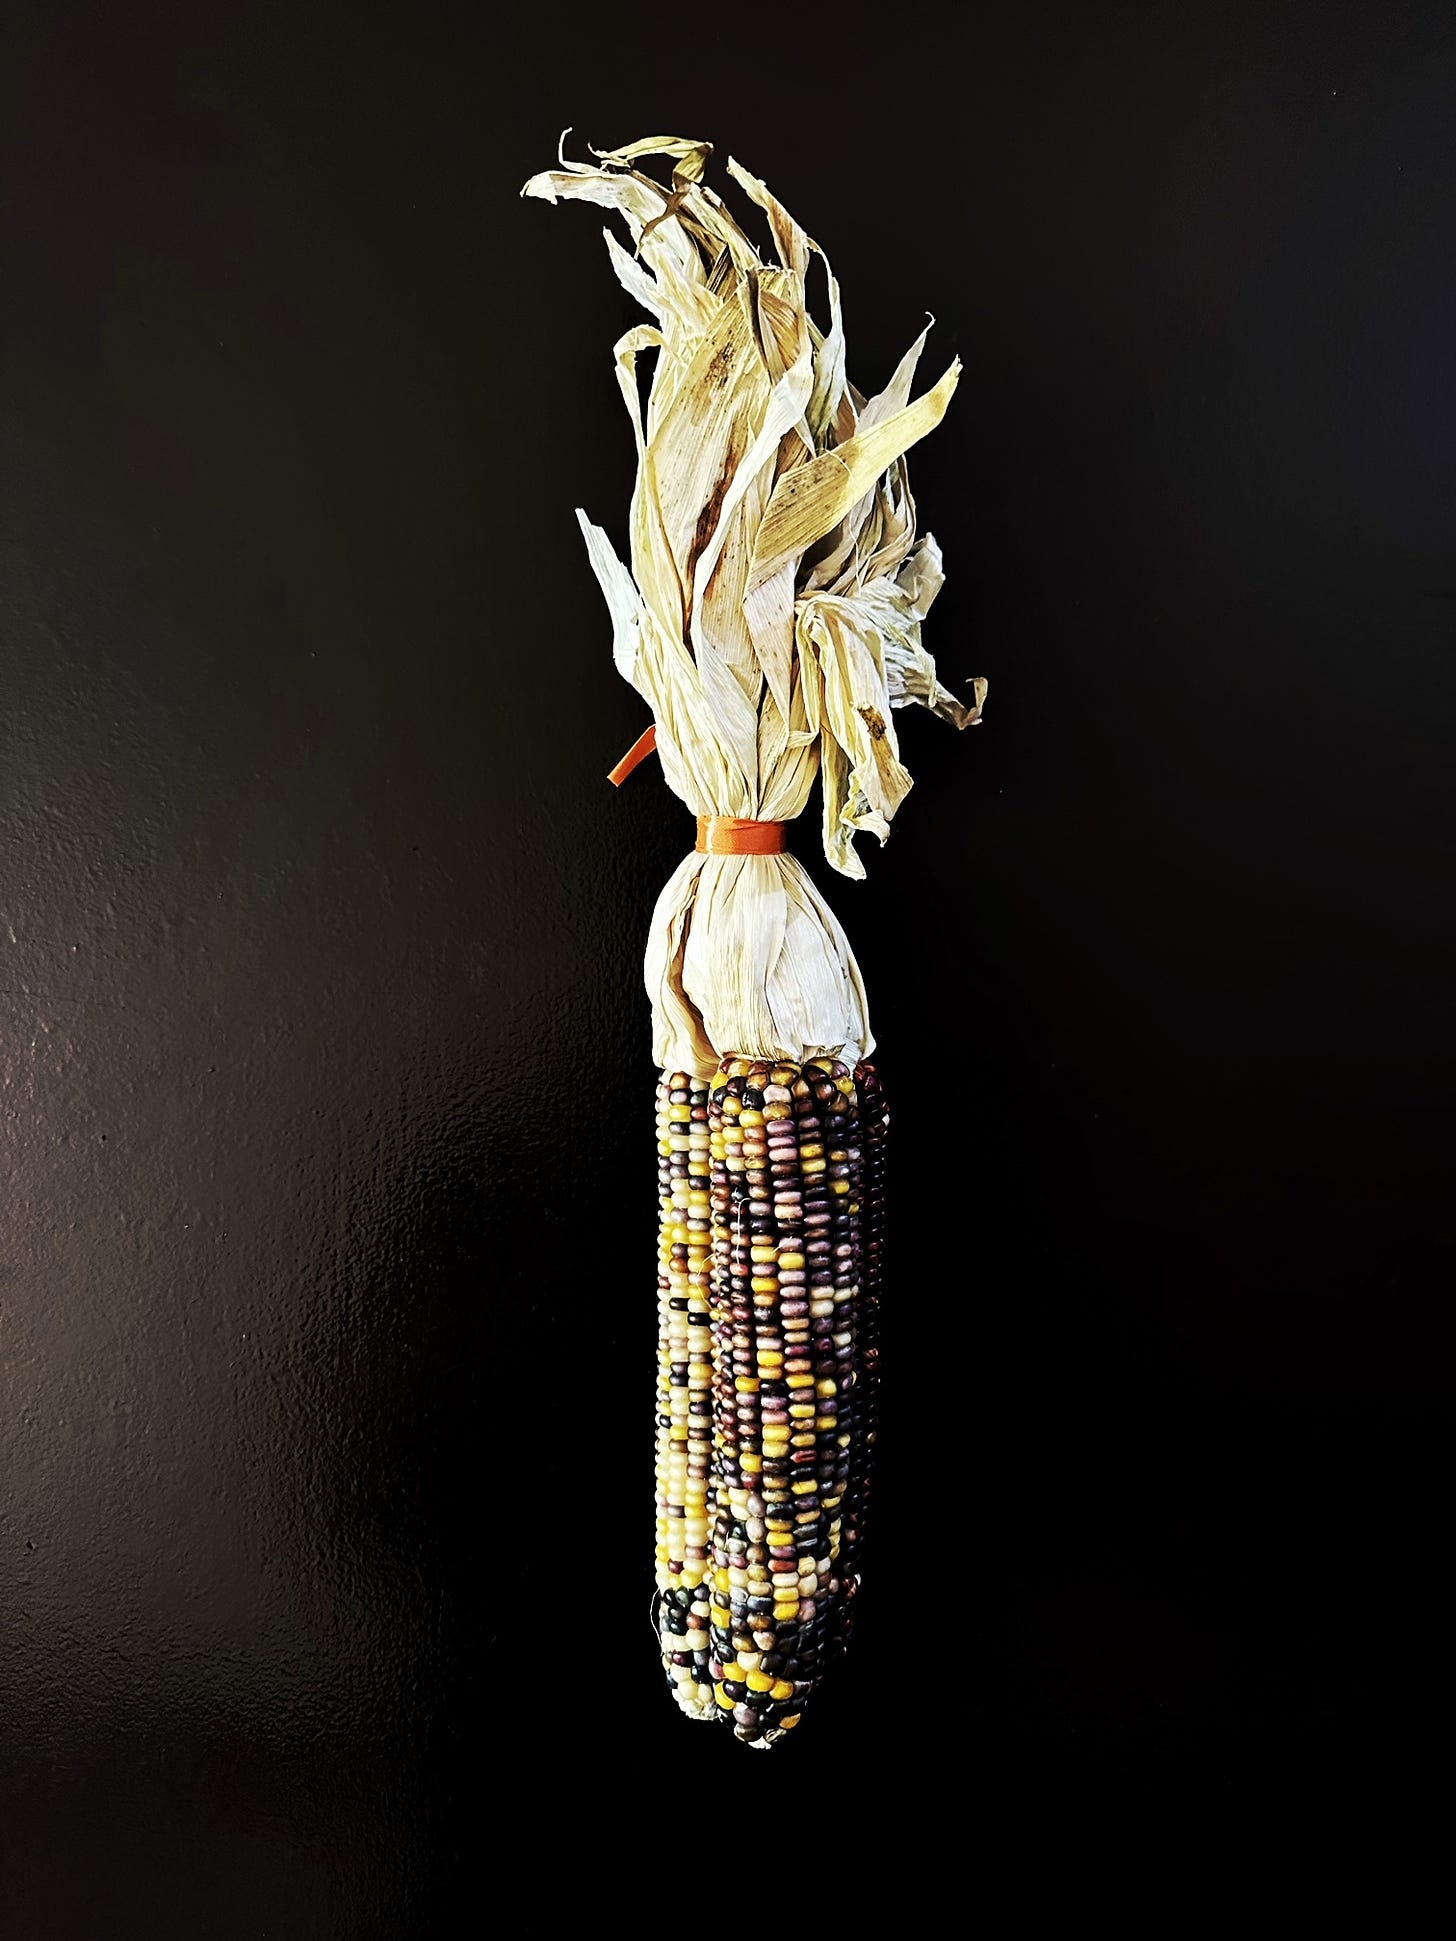 Ornamental Corn